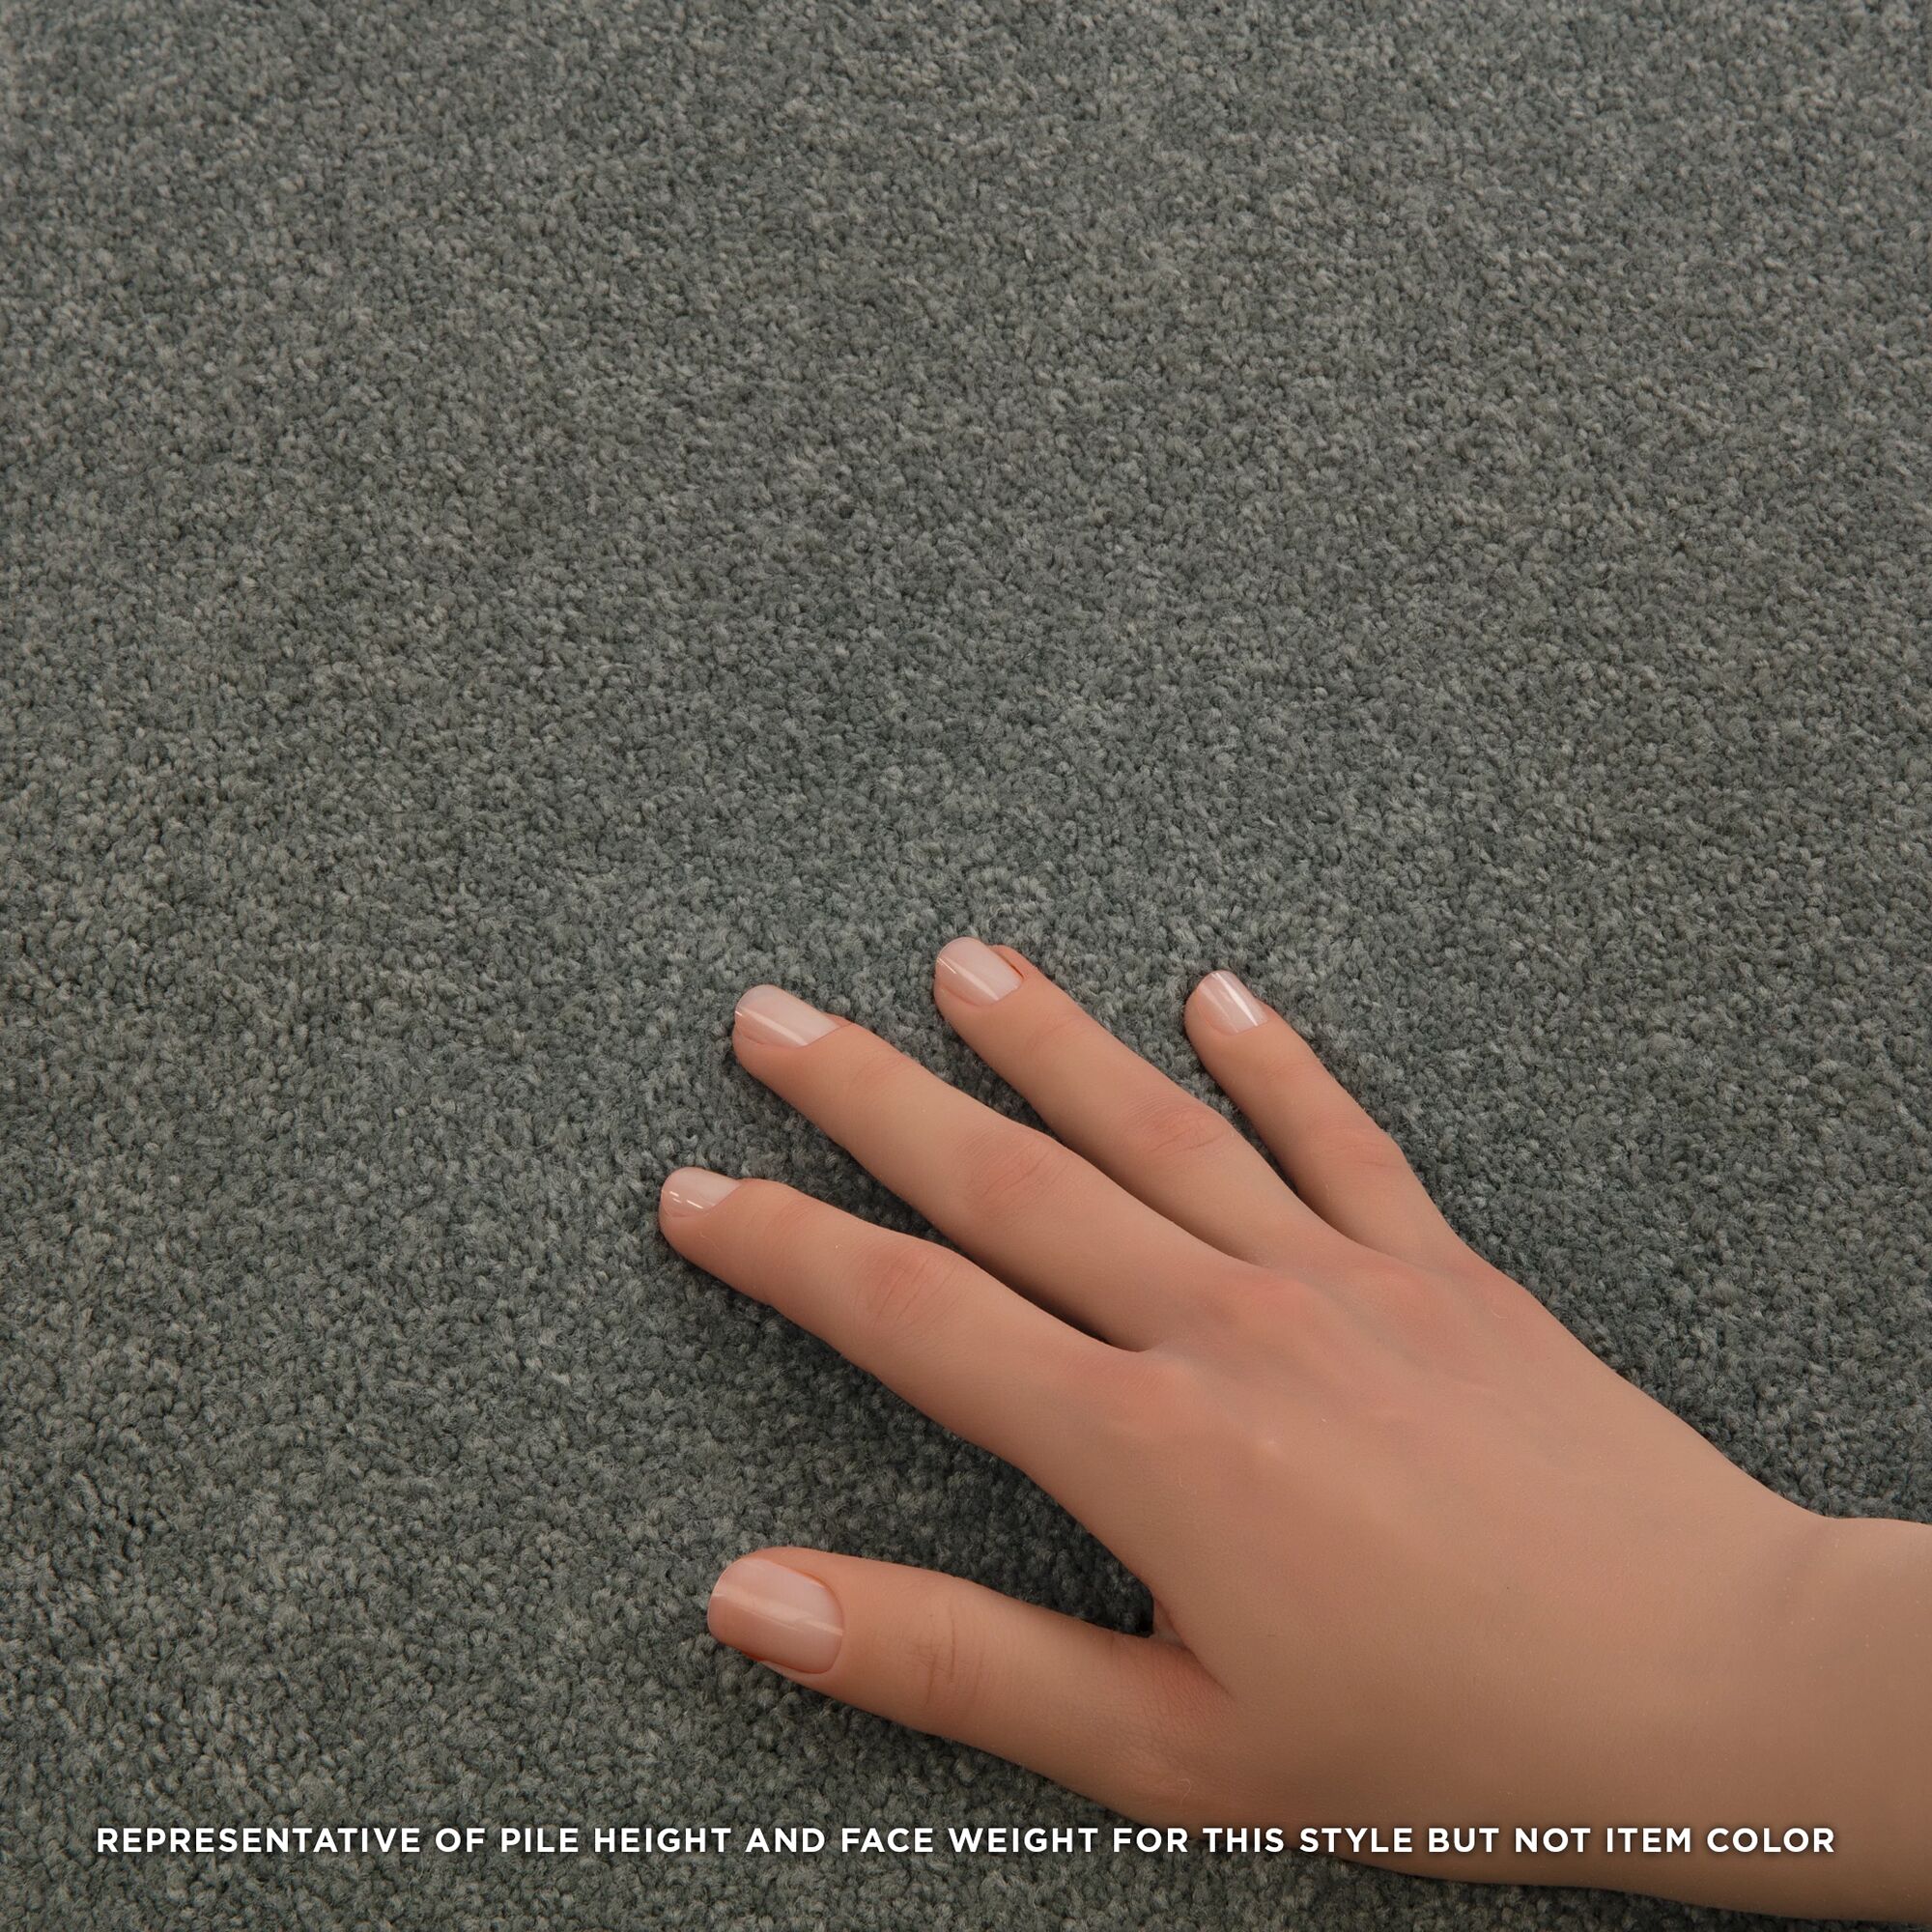 ANTI SKID Stainmaster Petprotect Carpet PADS: Reusable PU Non Slip